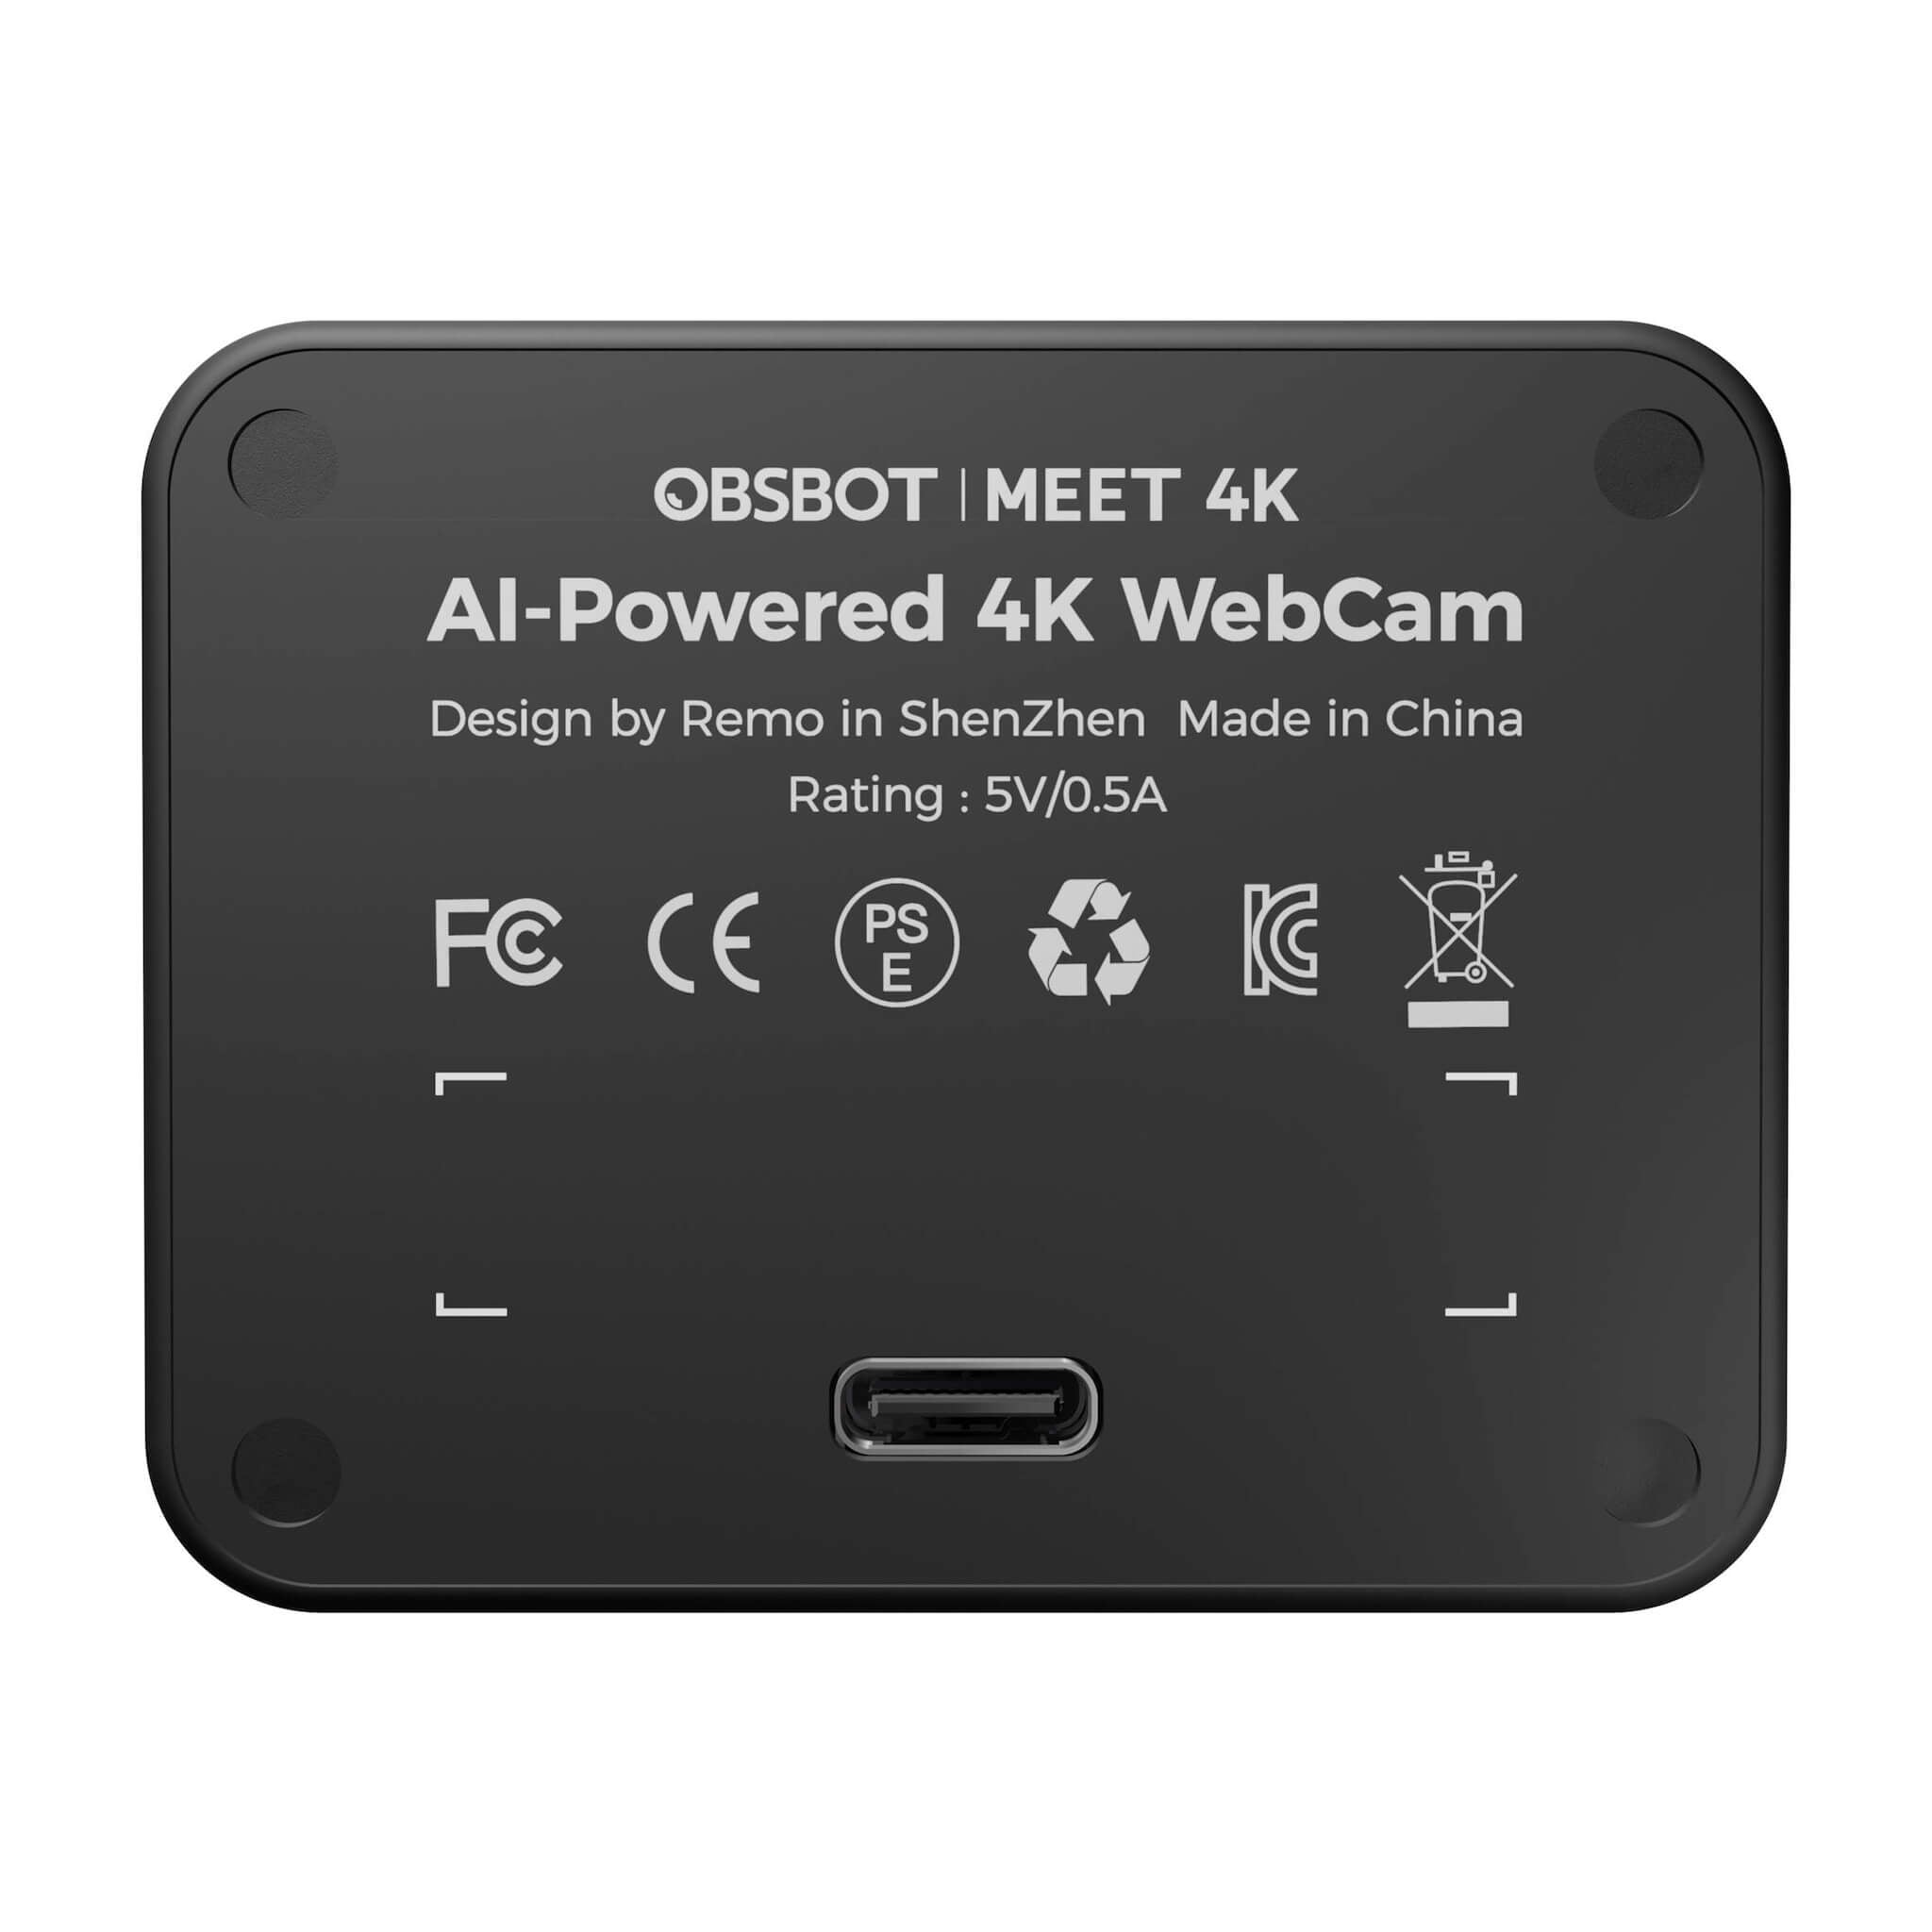 OBSBOT Meet 4K - AI-Powered 4K Auto-Framing PC Web Camera, back